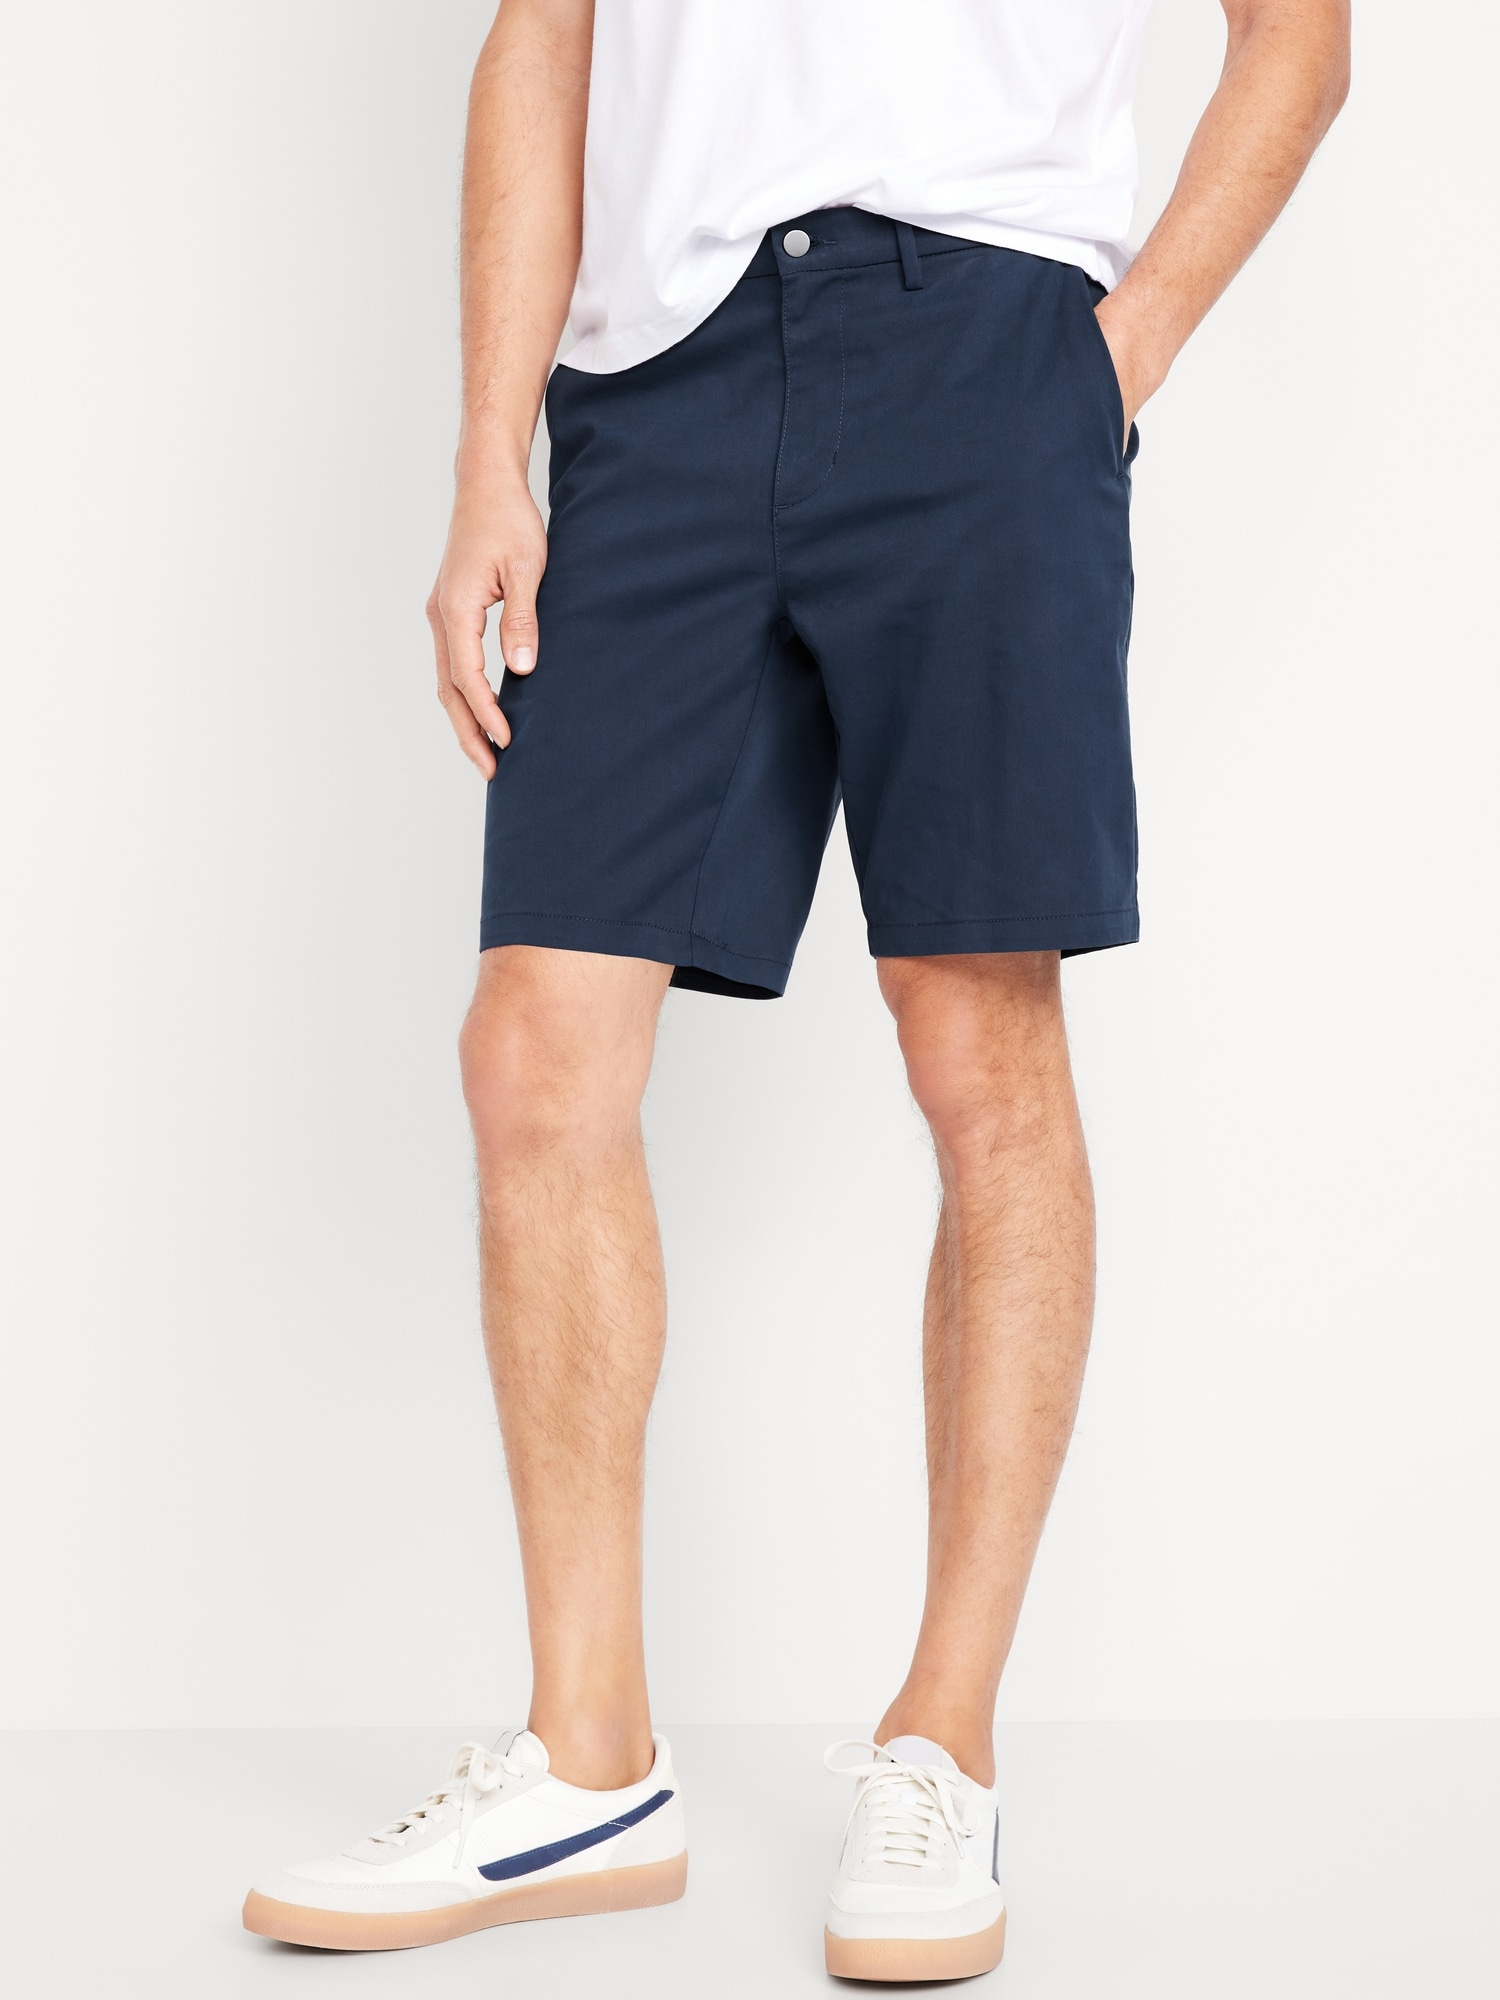 Slim Built-In Flex Chino Shorts -- 9-inch inseam Hot Deal